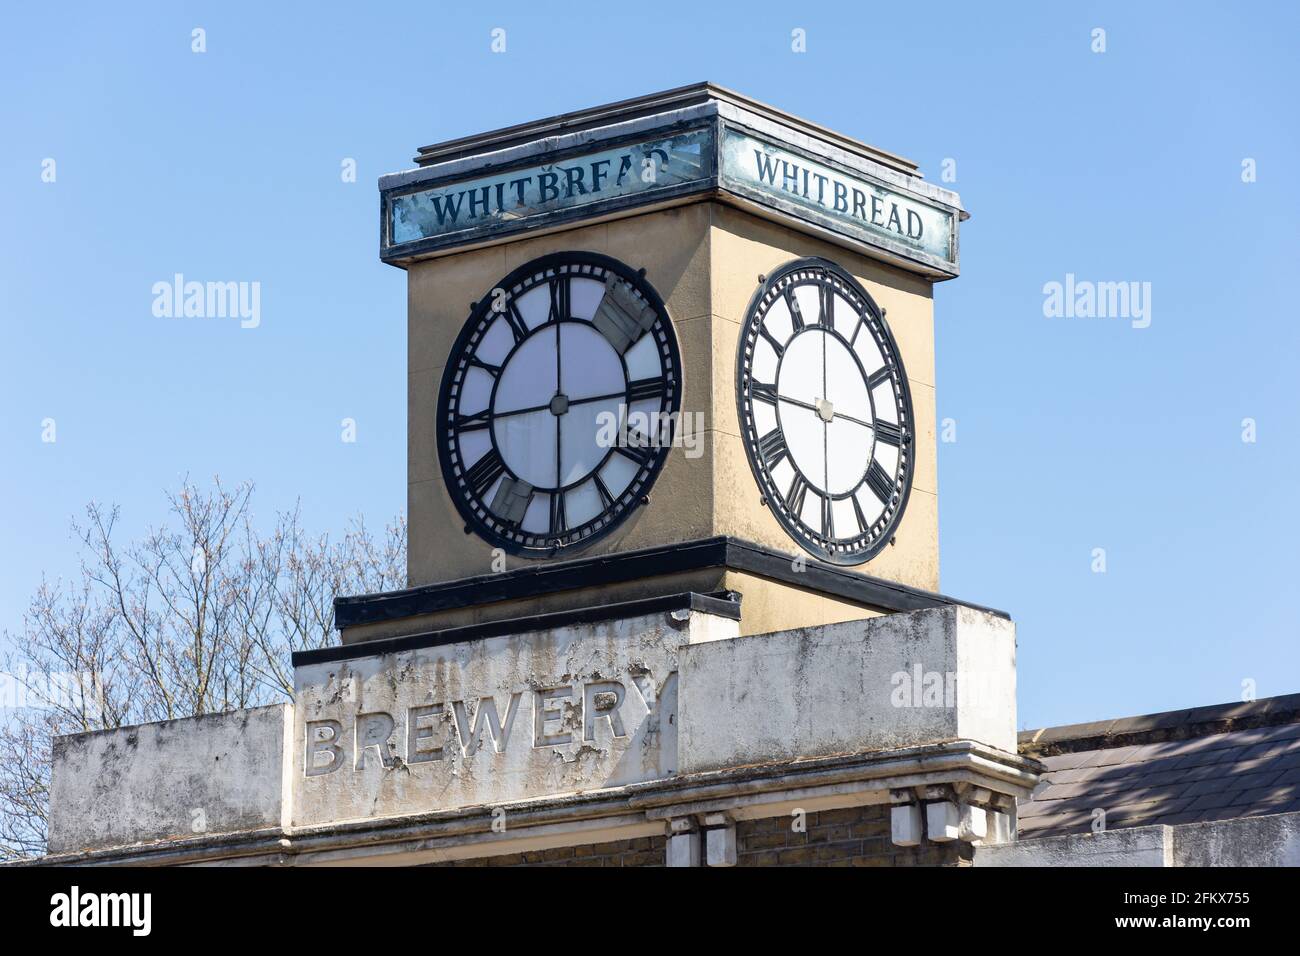 Vintage Whitbread Brewery clock, High Street, Tottenham, London Borough of Haringey, Greater London, England, United Kingdom Stock Photo